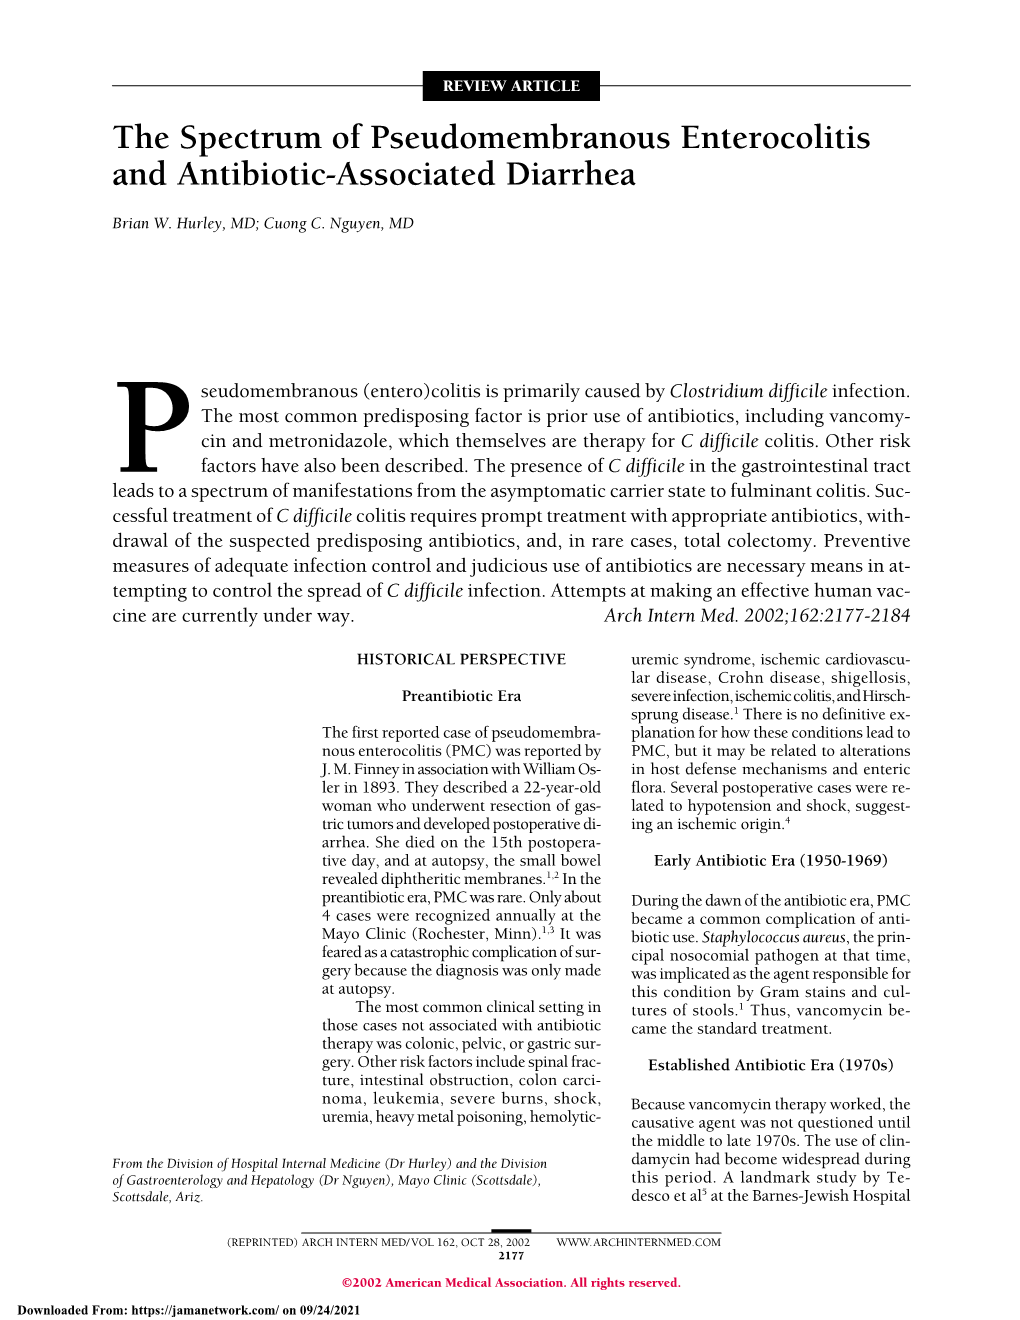 The Spectrum of Pseudomembranous Enterocolitis and Antibiotic-Associated Diarrhea